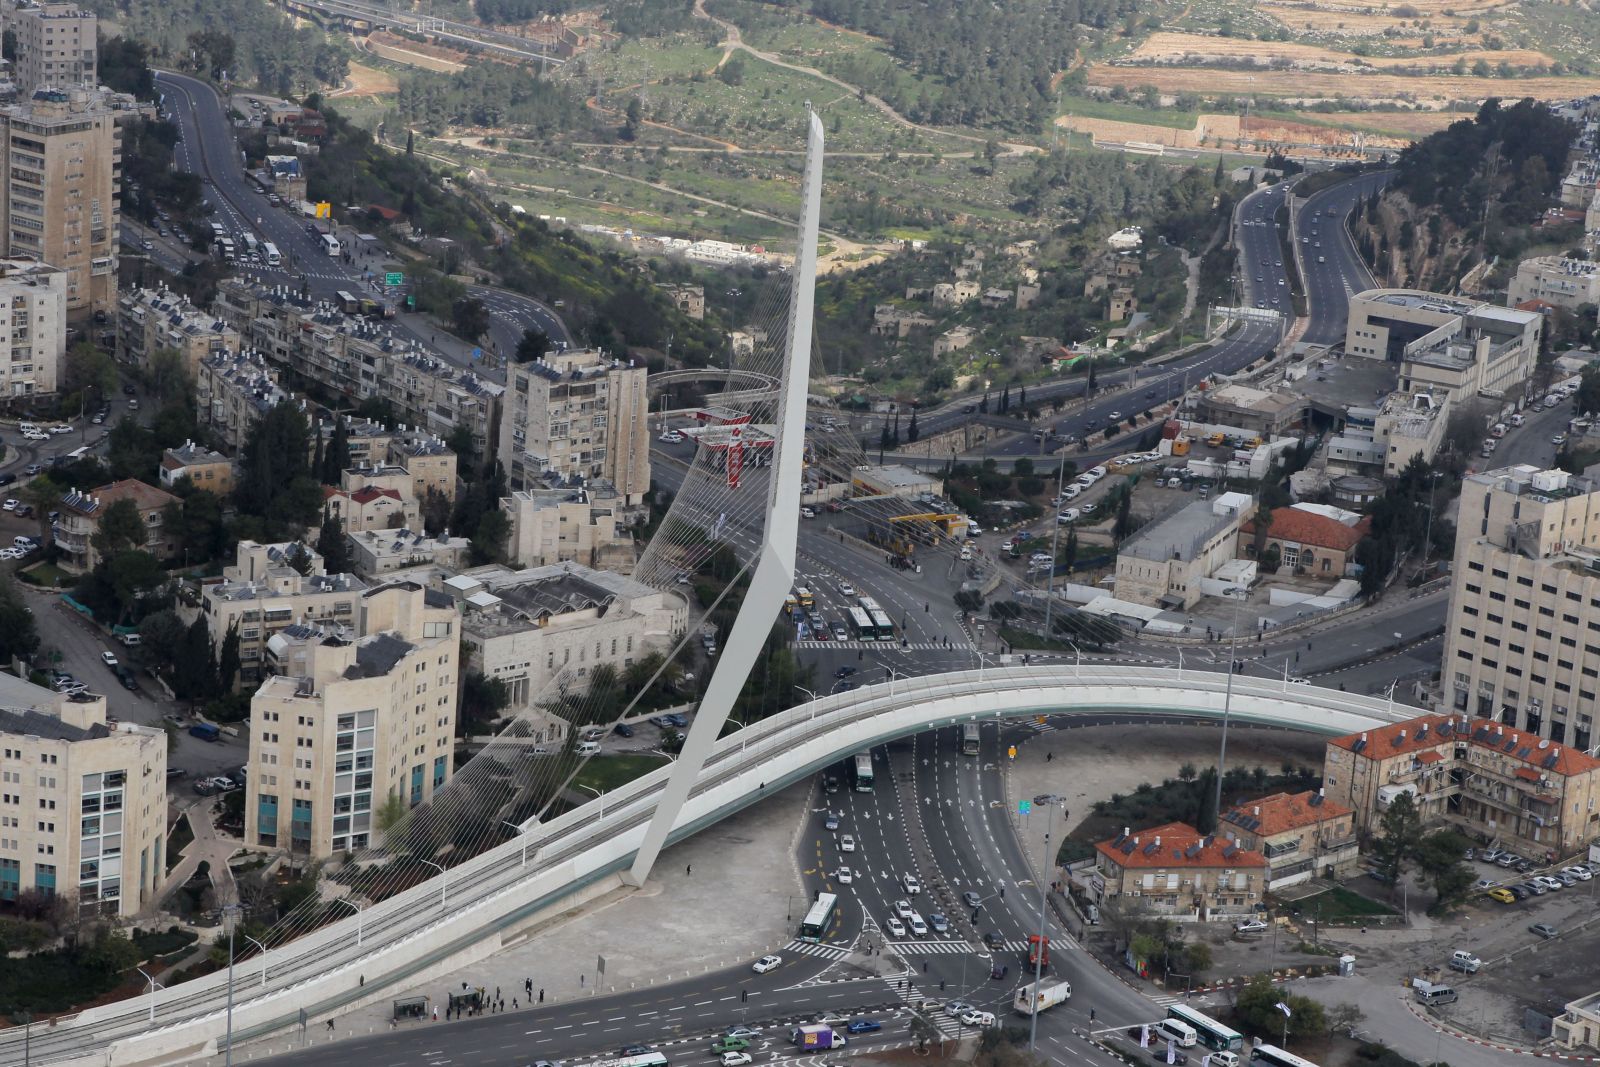  The Chords Bridge dominates the Jerusalem skyline. Photo by Nati Shohat/FLASH90